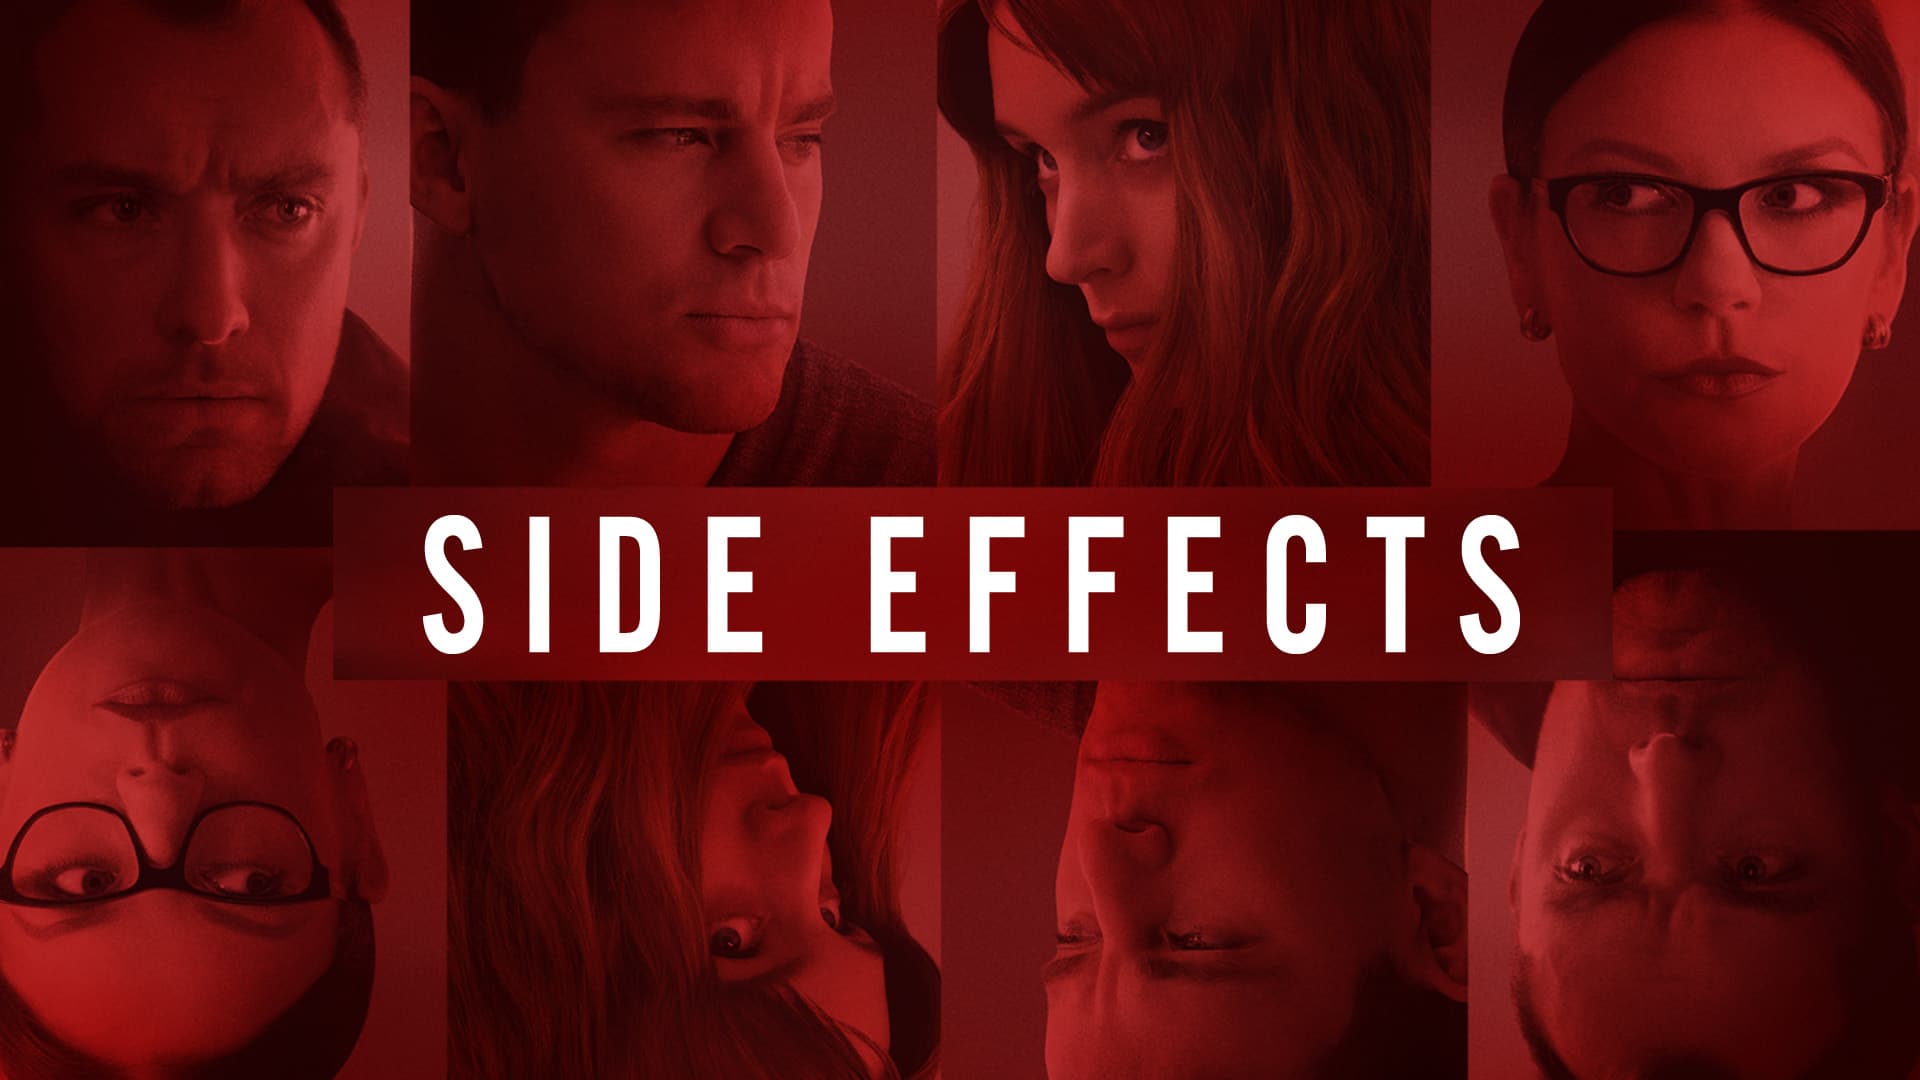 دانلود فیلم Side Effects 2013